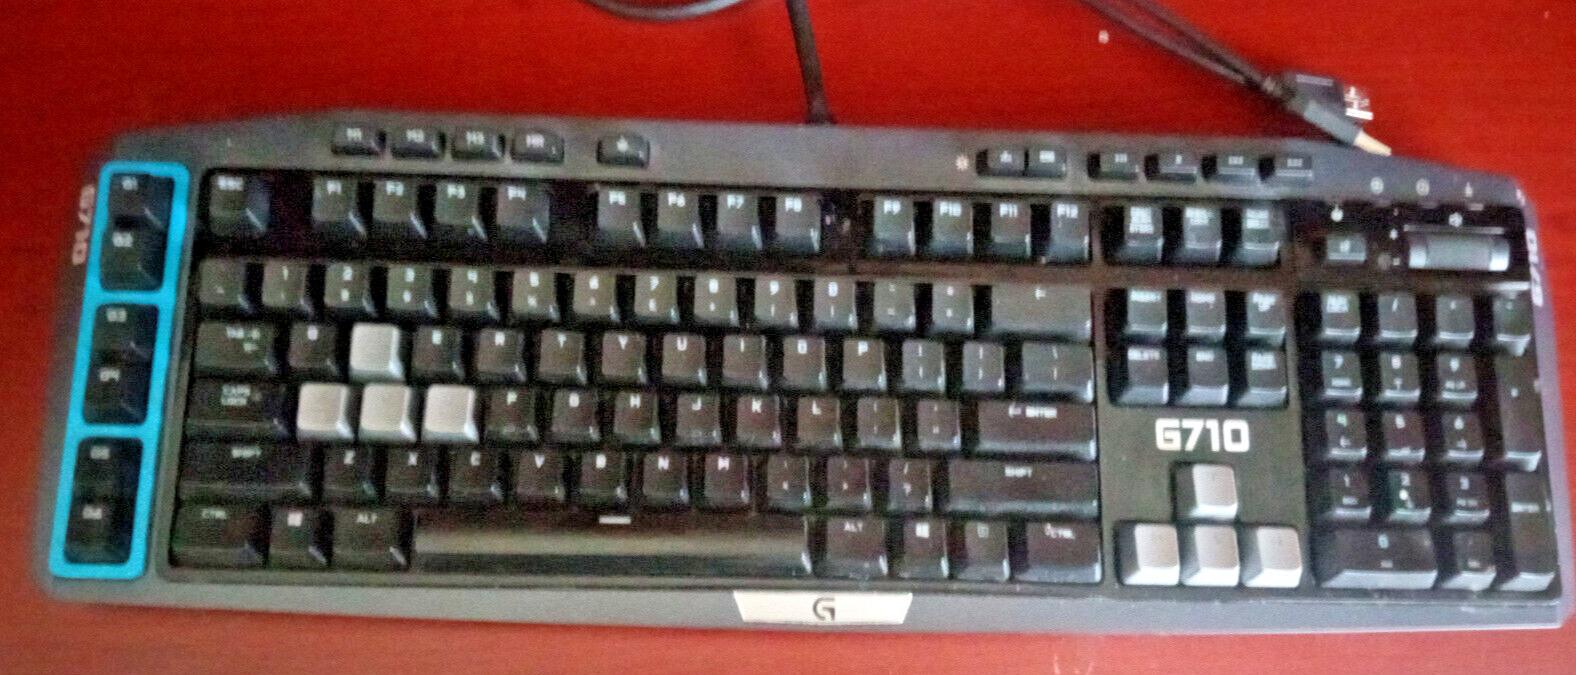 Logitech G710 Mechanical Gaming Keyboard 820-006810 Illuminated Keys Dual USB